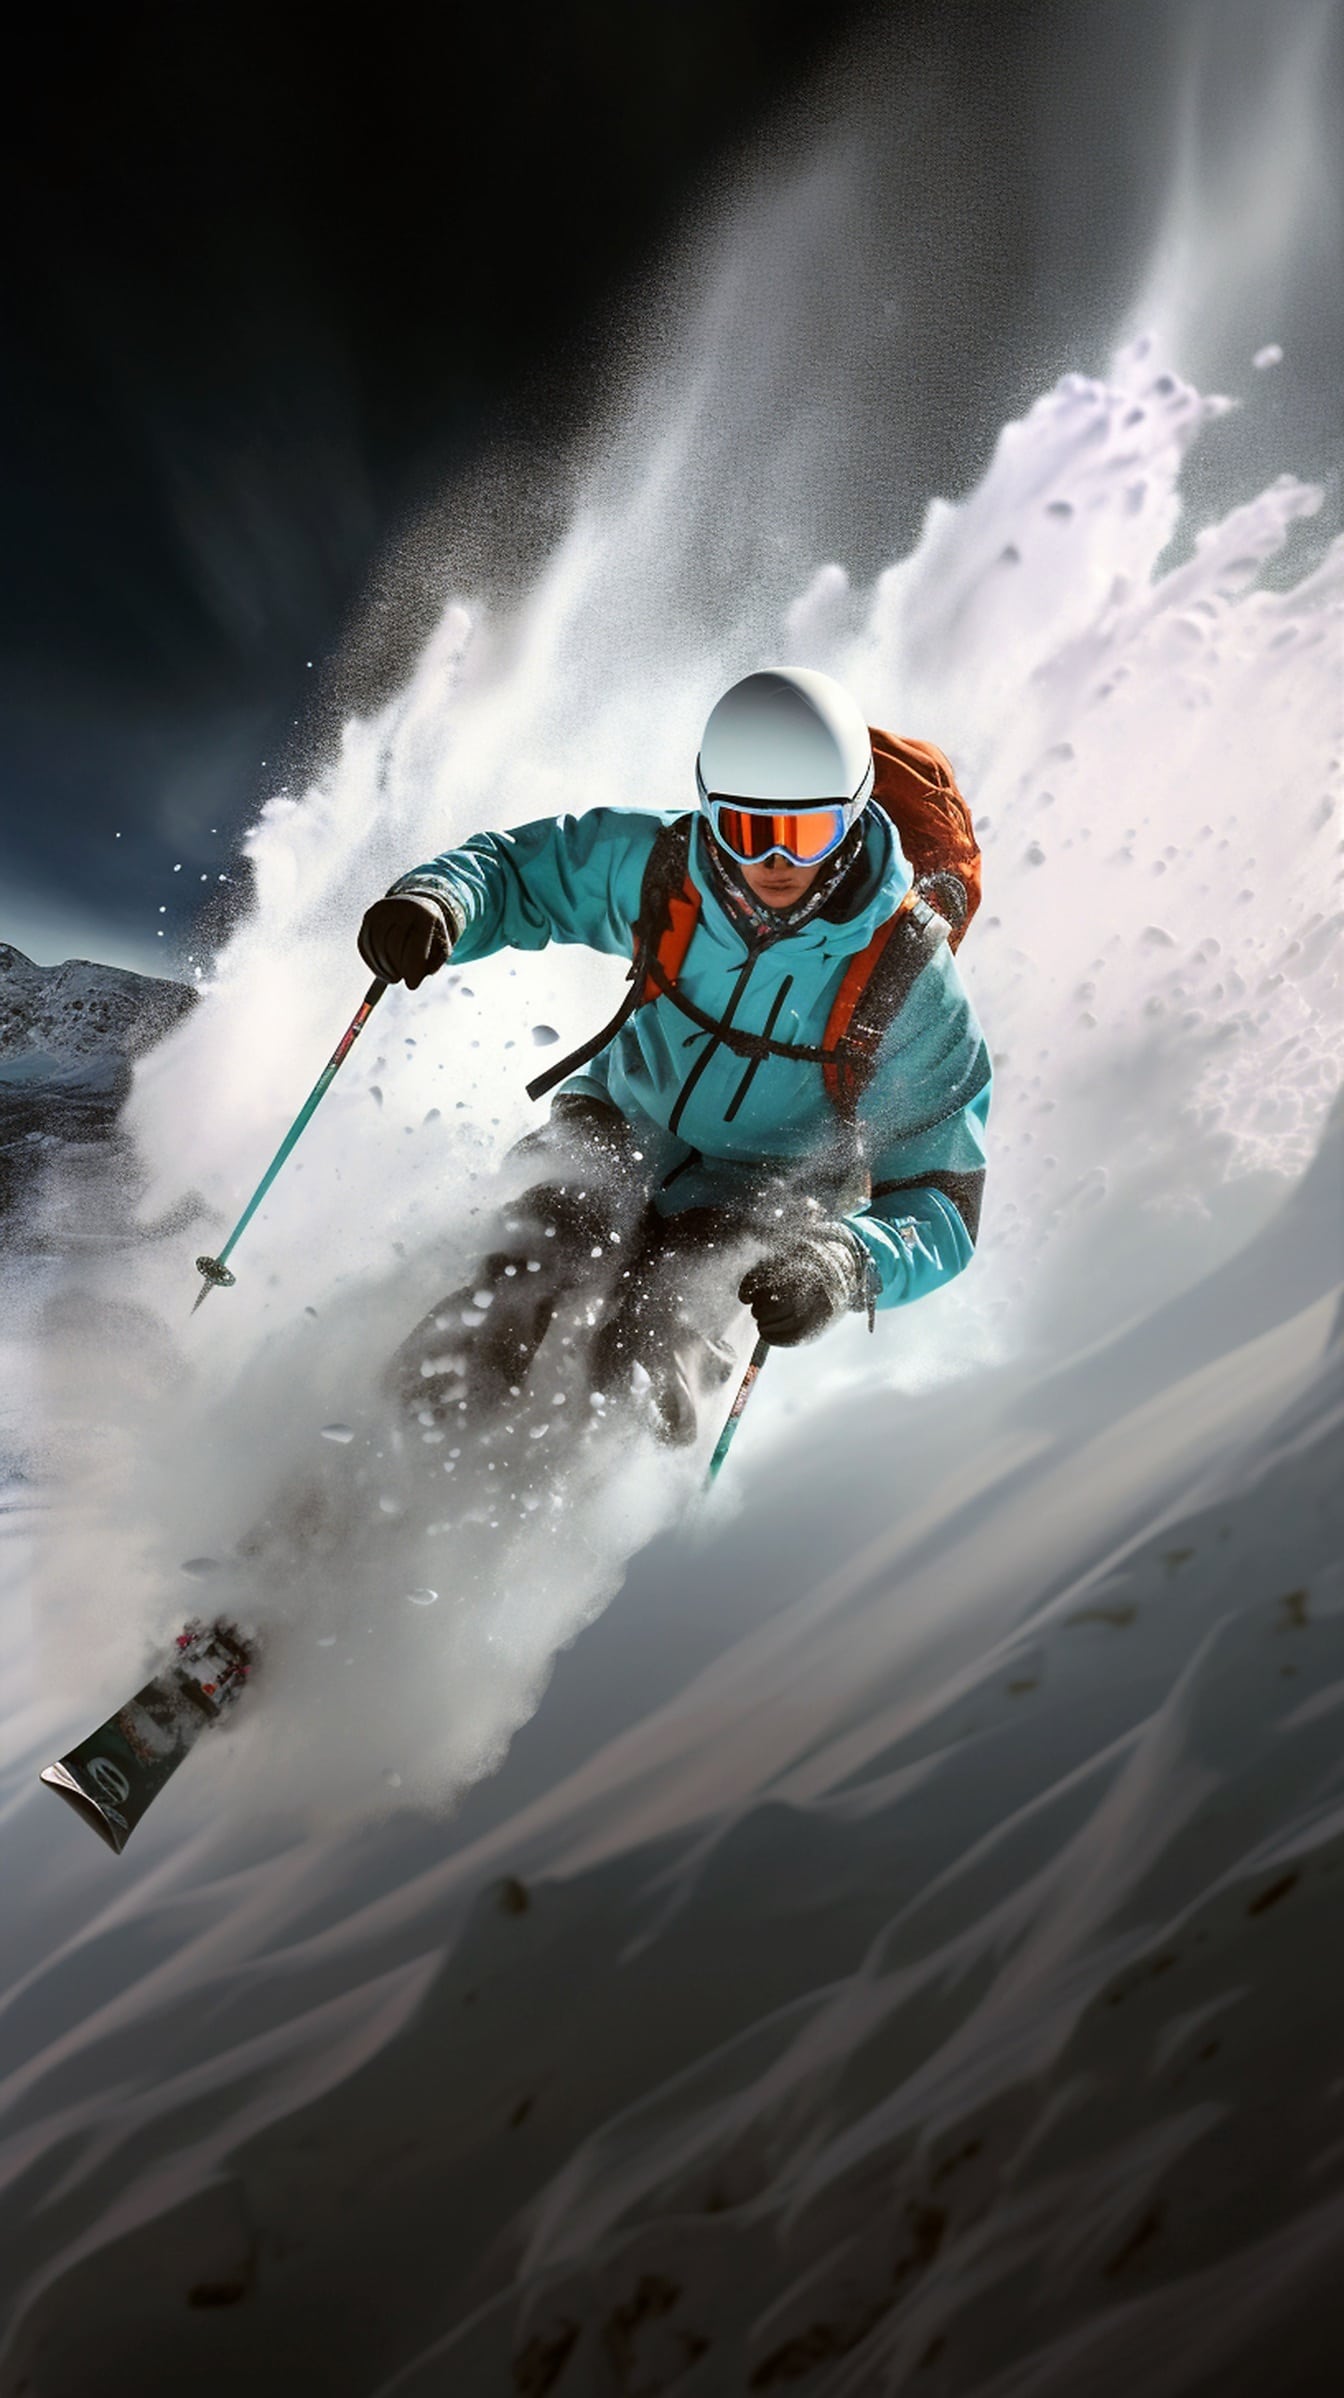 Close-up van extreme sportskiër skiën bij besneeuwde berg